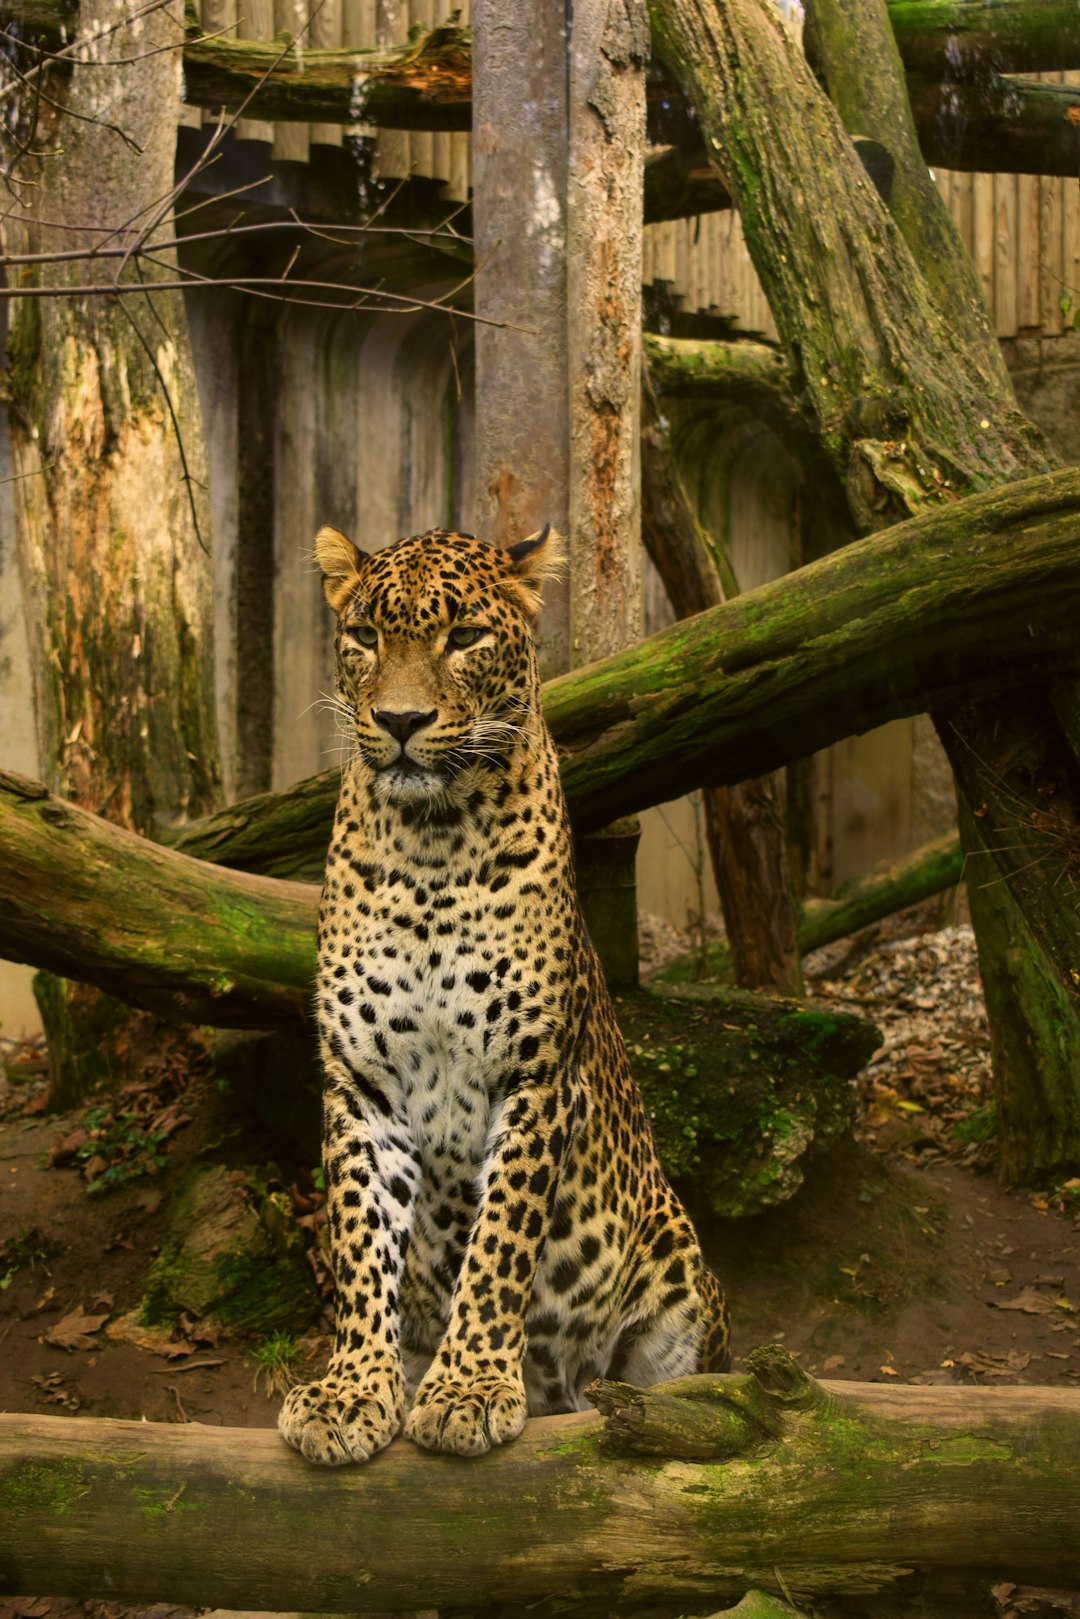  leopard standing on tree brunch at daytime leopard